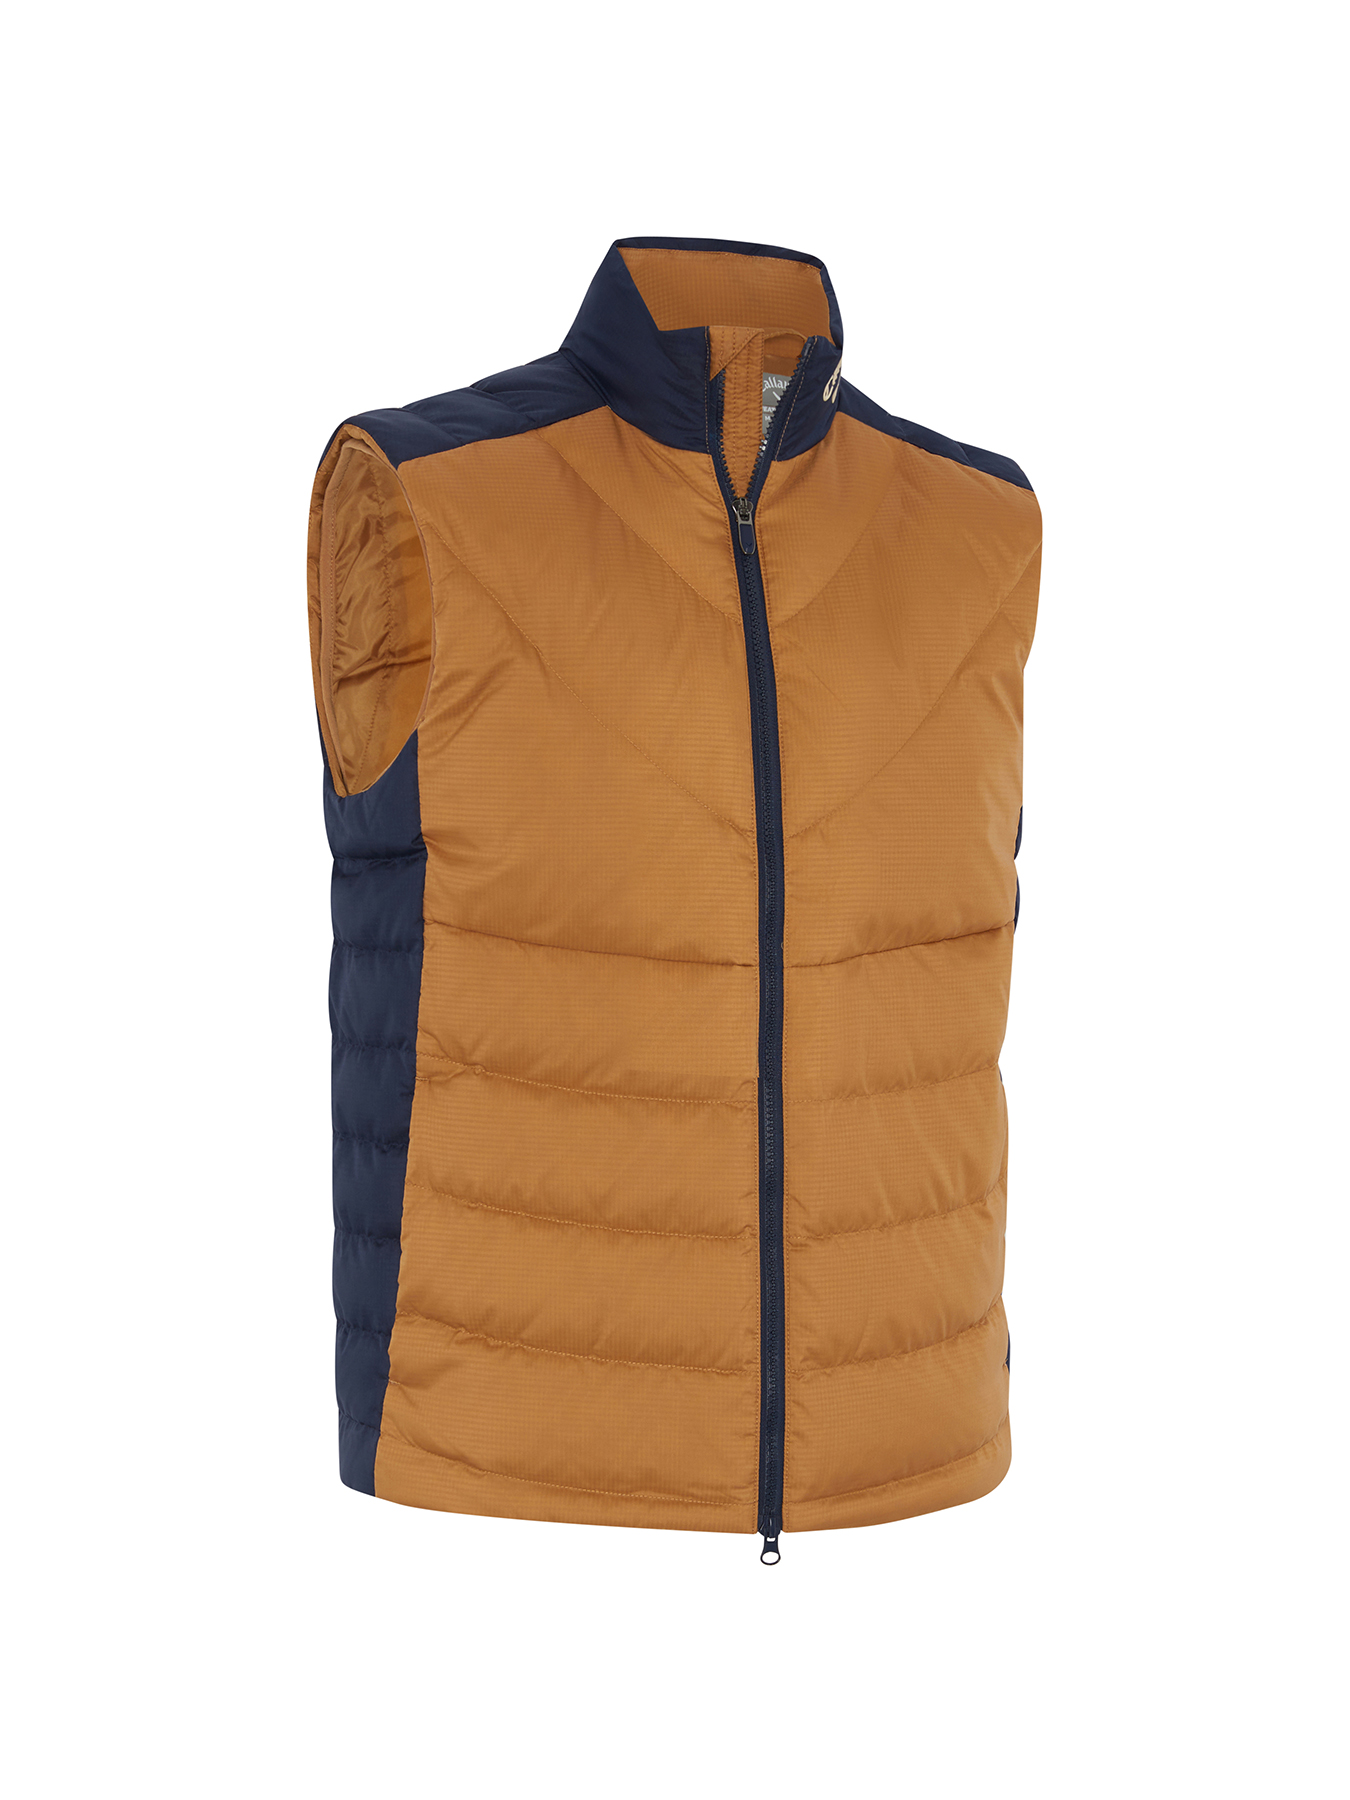 Callaway Primaloft Premium pánská golfová vesta, hnědá/tmavě modrá, vel. M